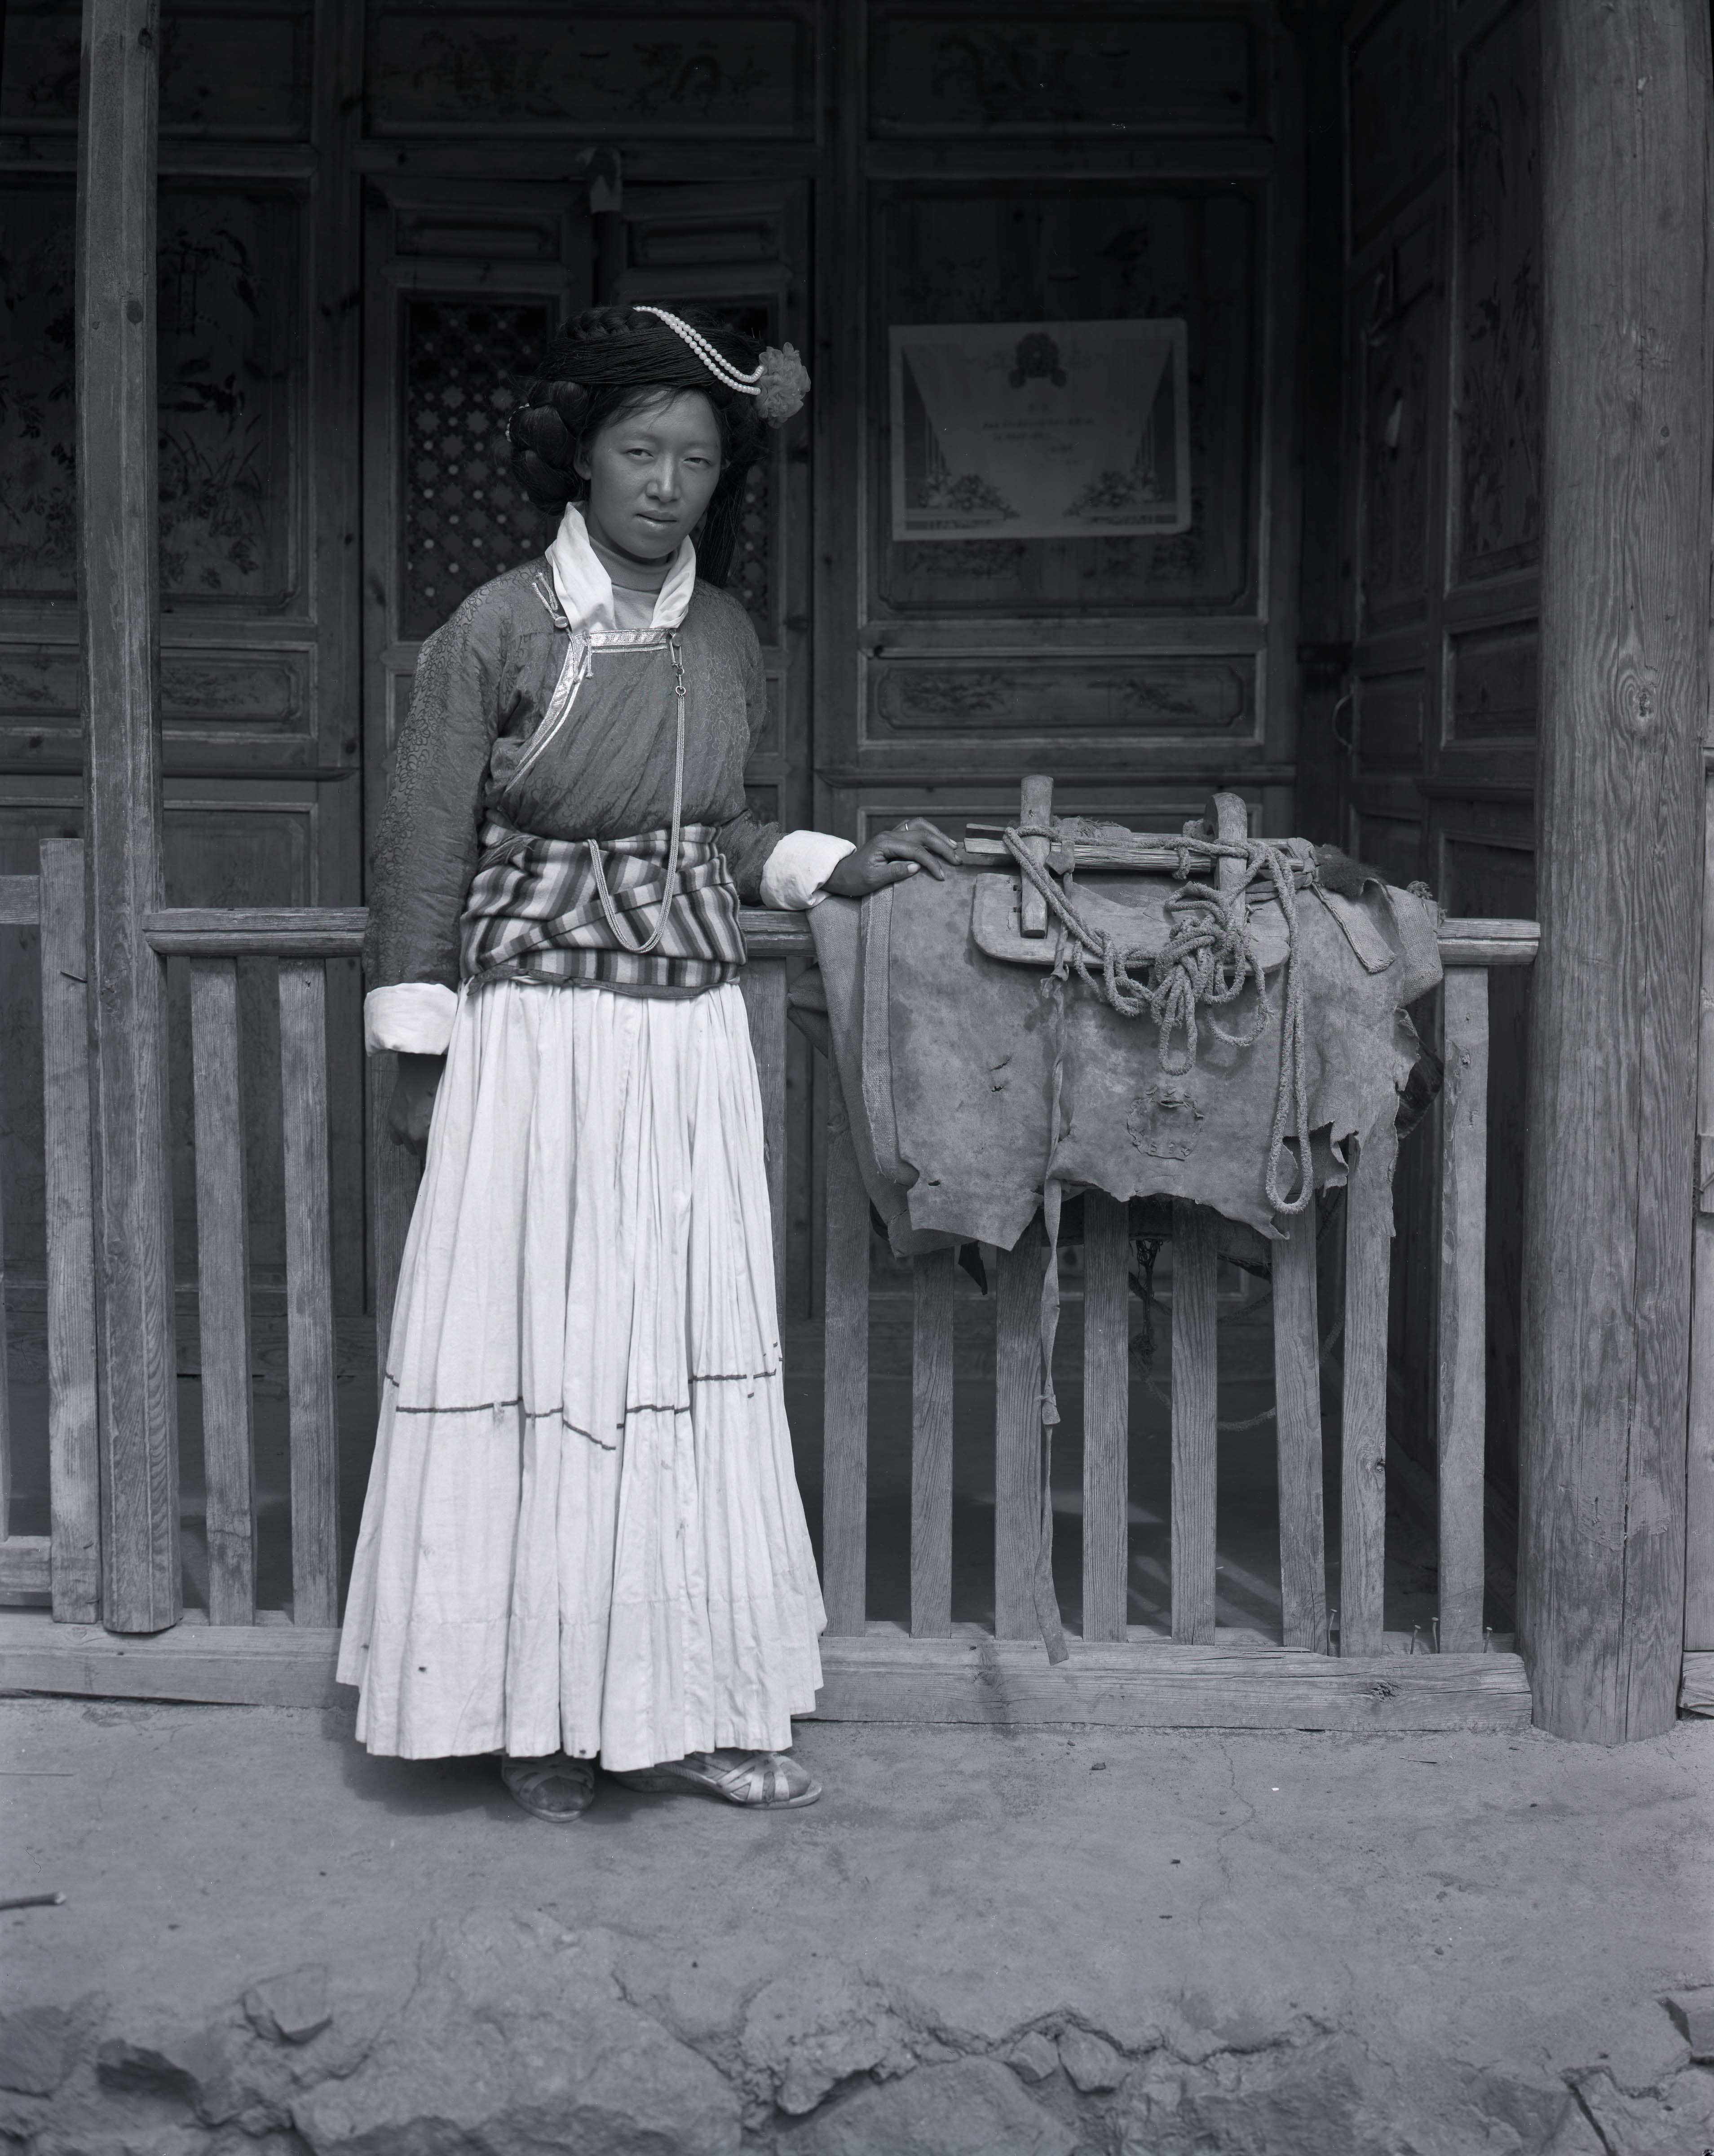 China, Yunnan Prov, Moshuo Woman With Saddle, 1991, N040